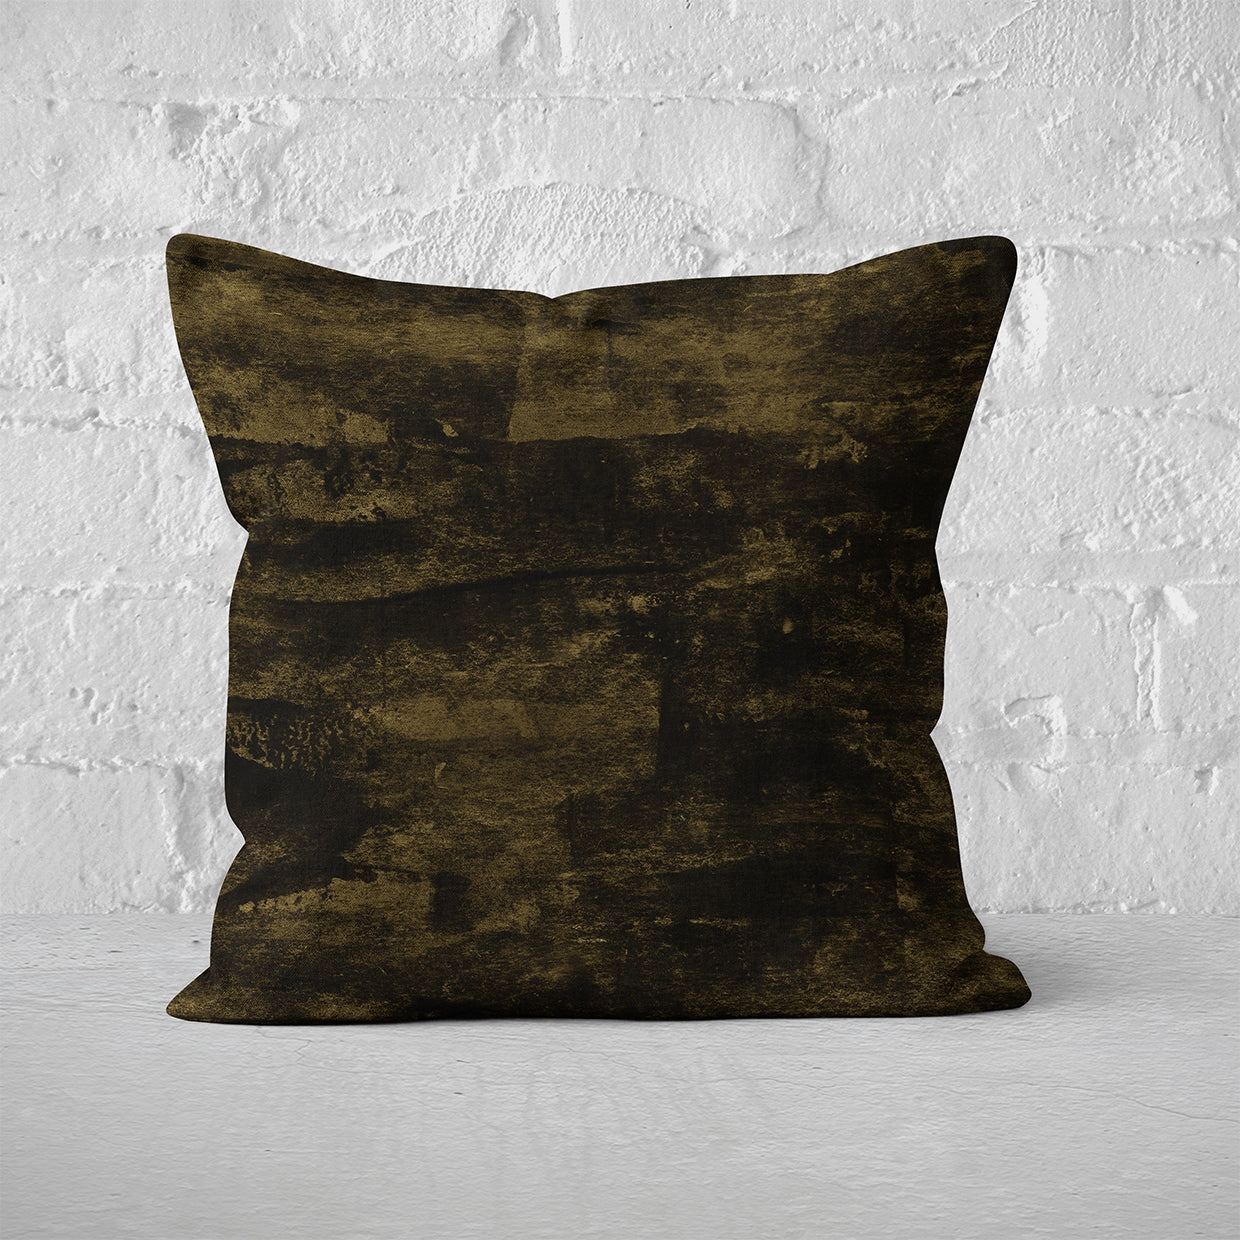 Pillow Cover Art Feature 'Satellite' - Black & Tan - Cotton Twill